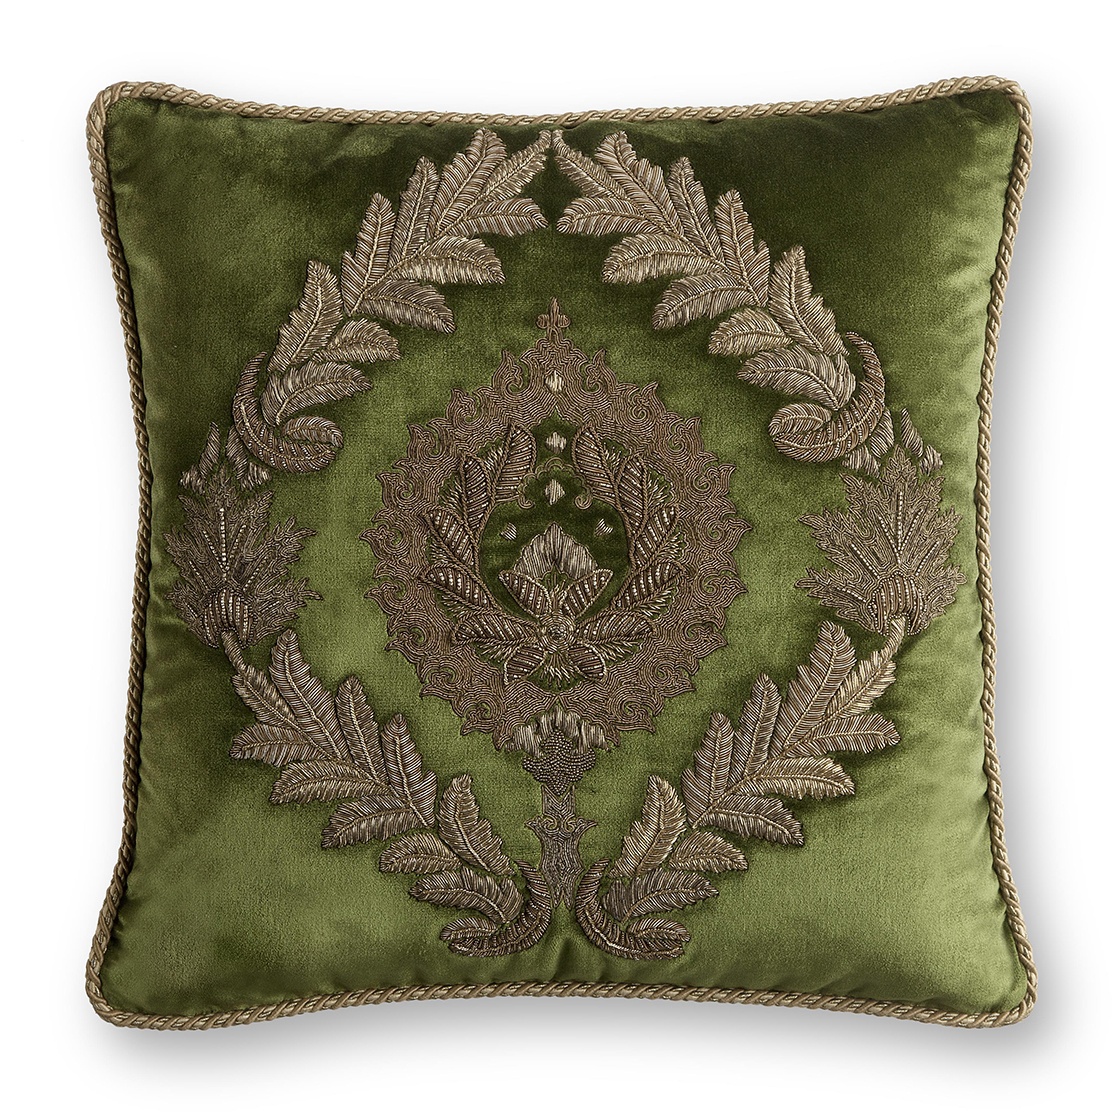 Rossini cushion in Capri silk velvet- Georgian green - Beaumont & Fletcher